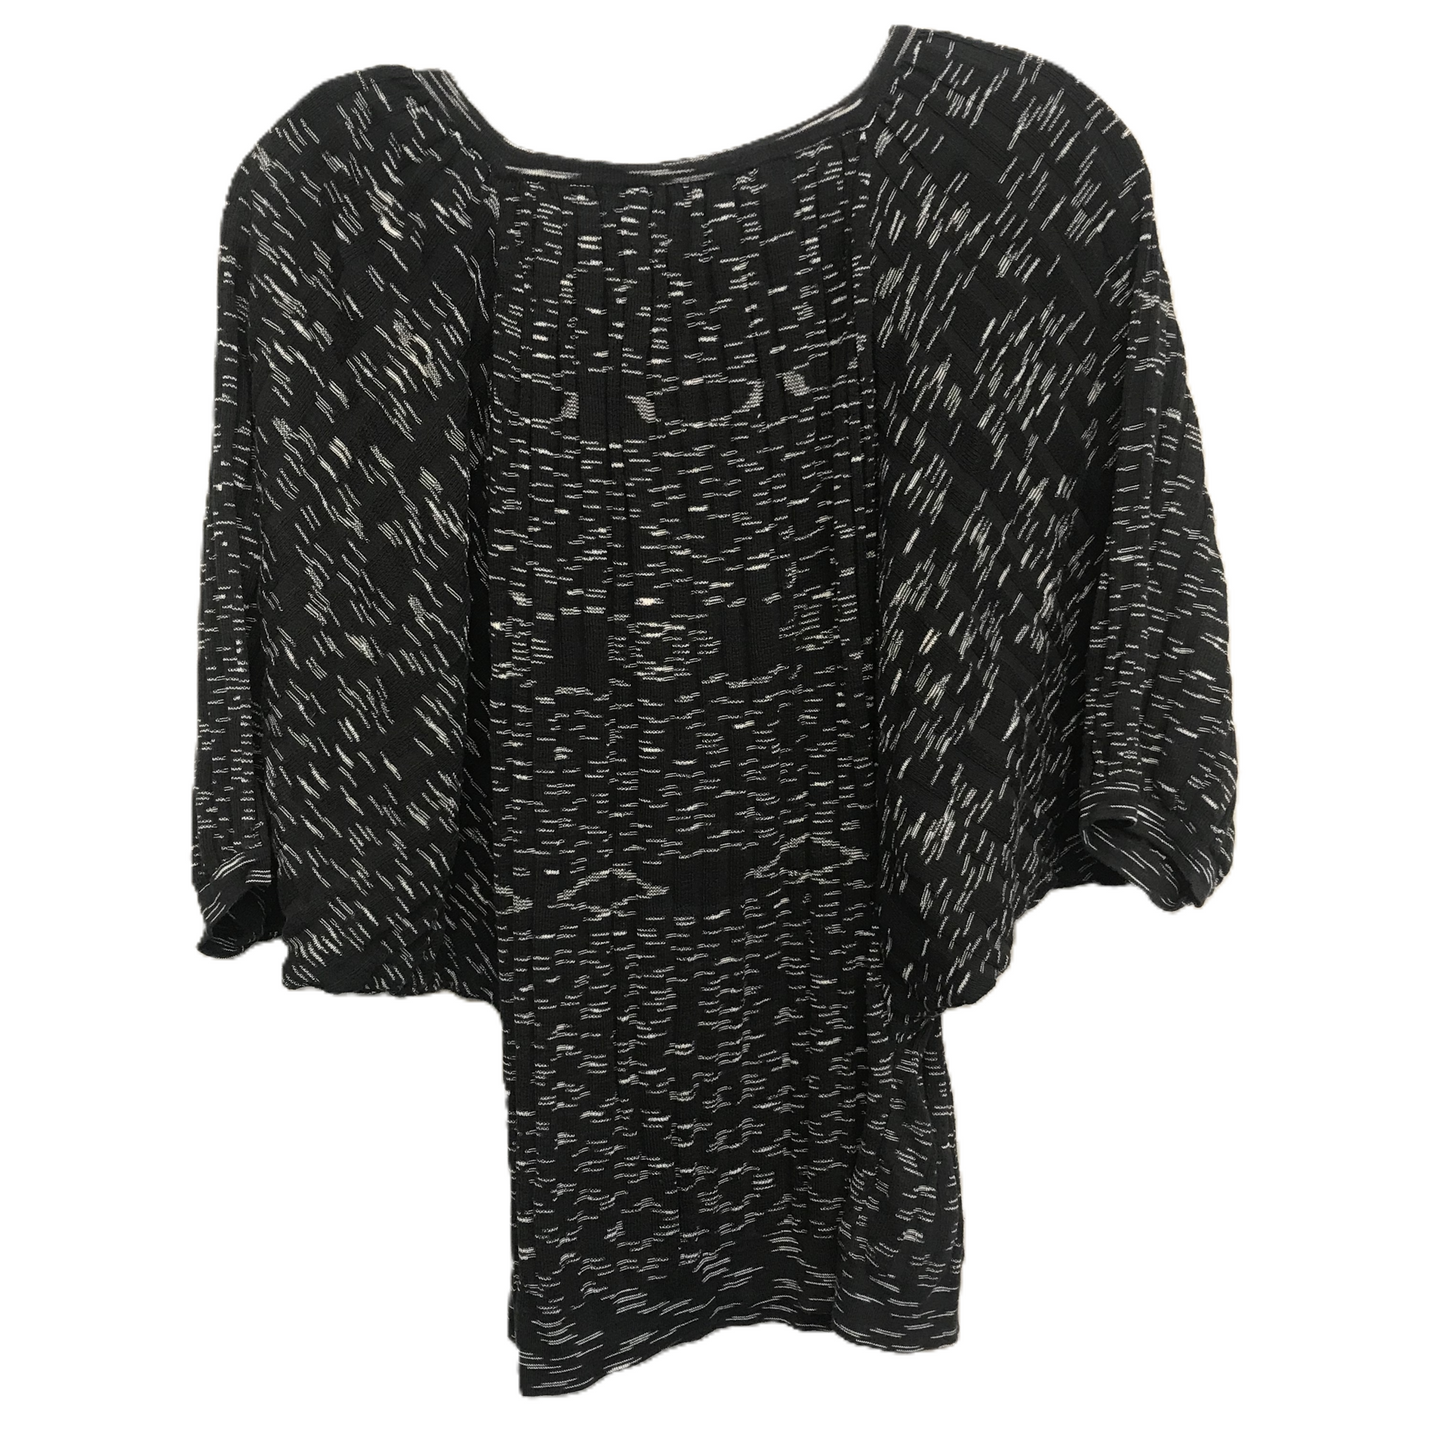 Black & White Top Short Sleeve By Bcbgmaxazria, Size: Xs